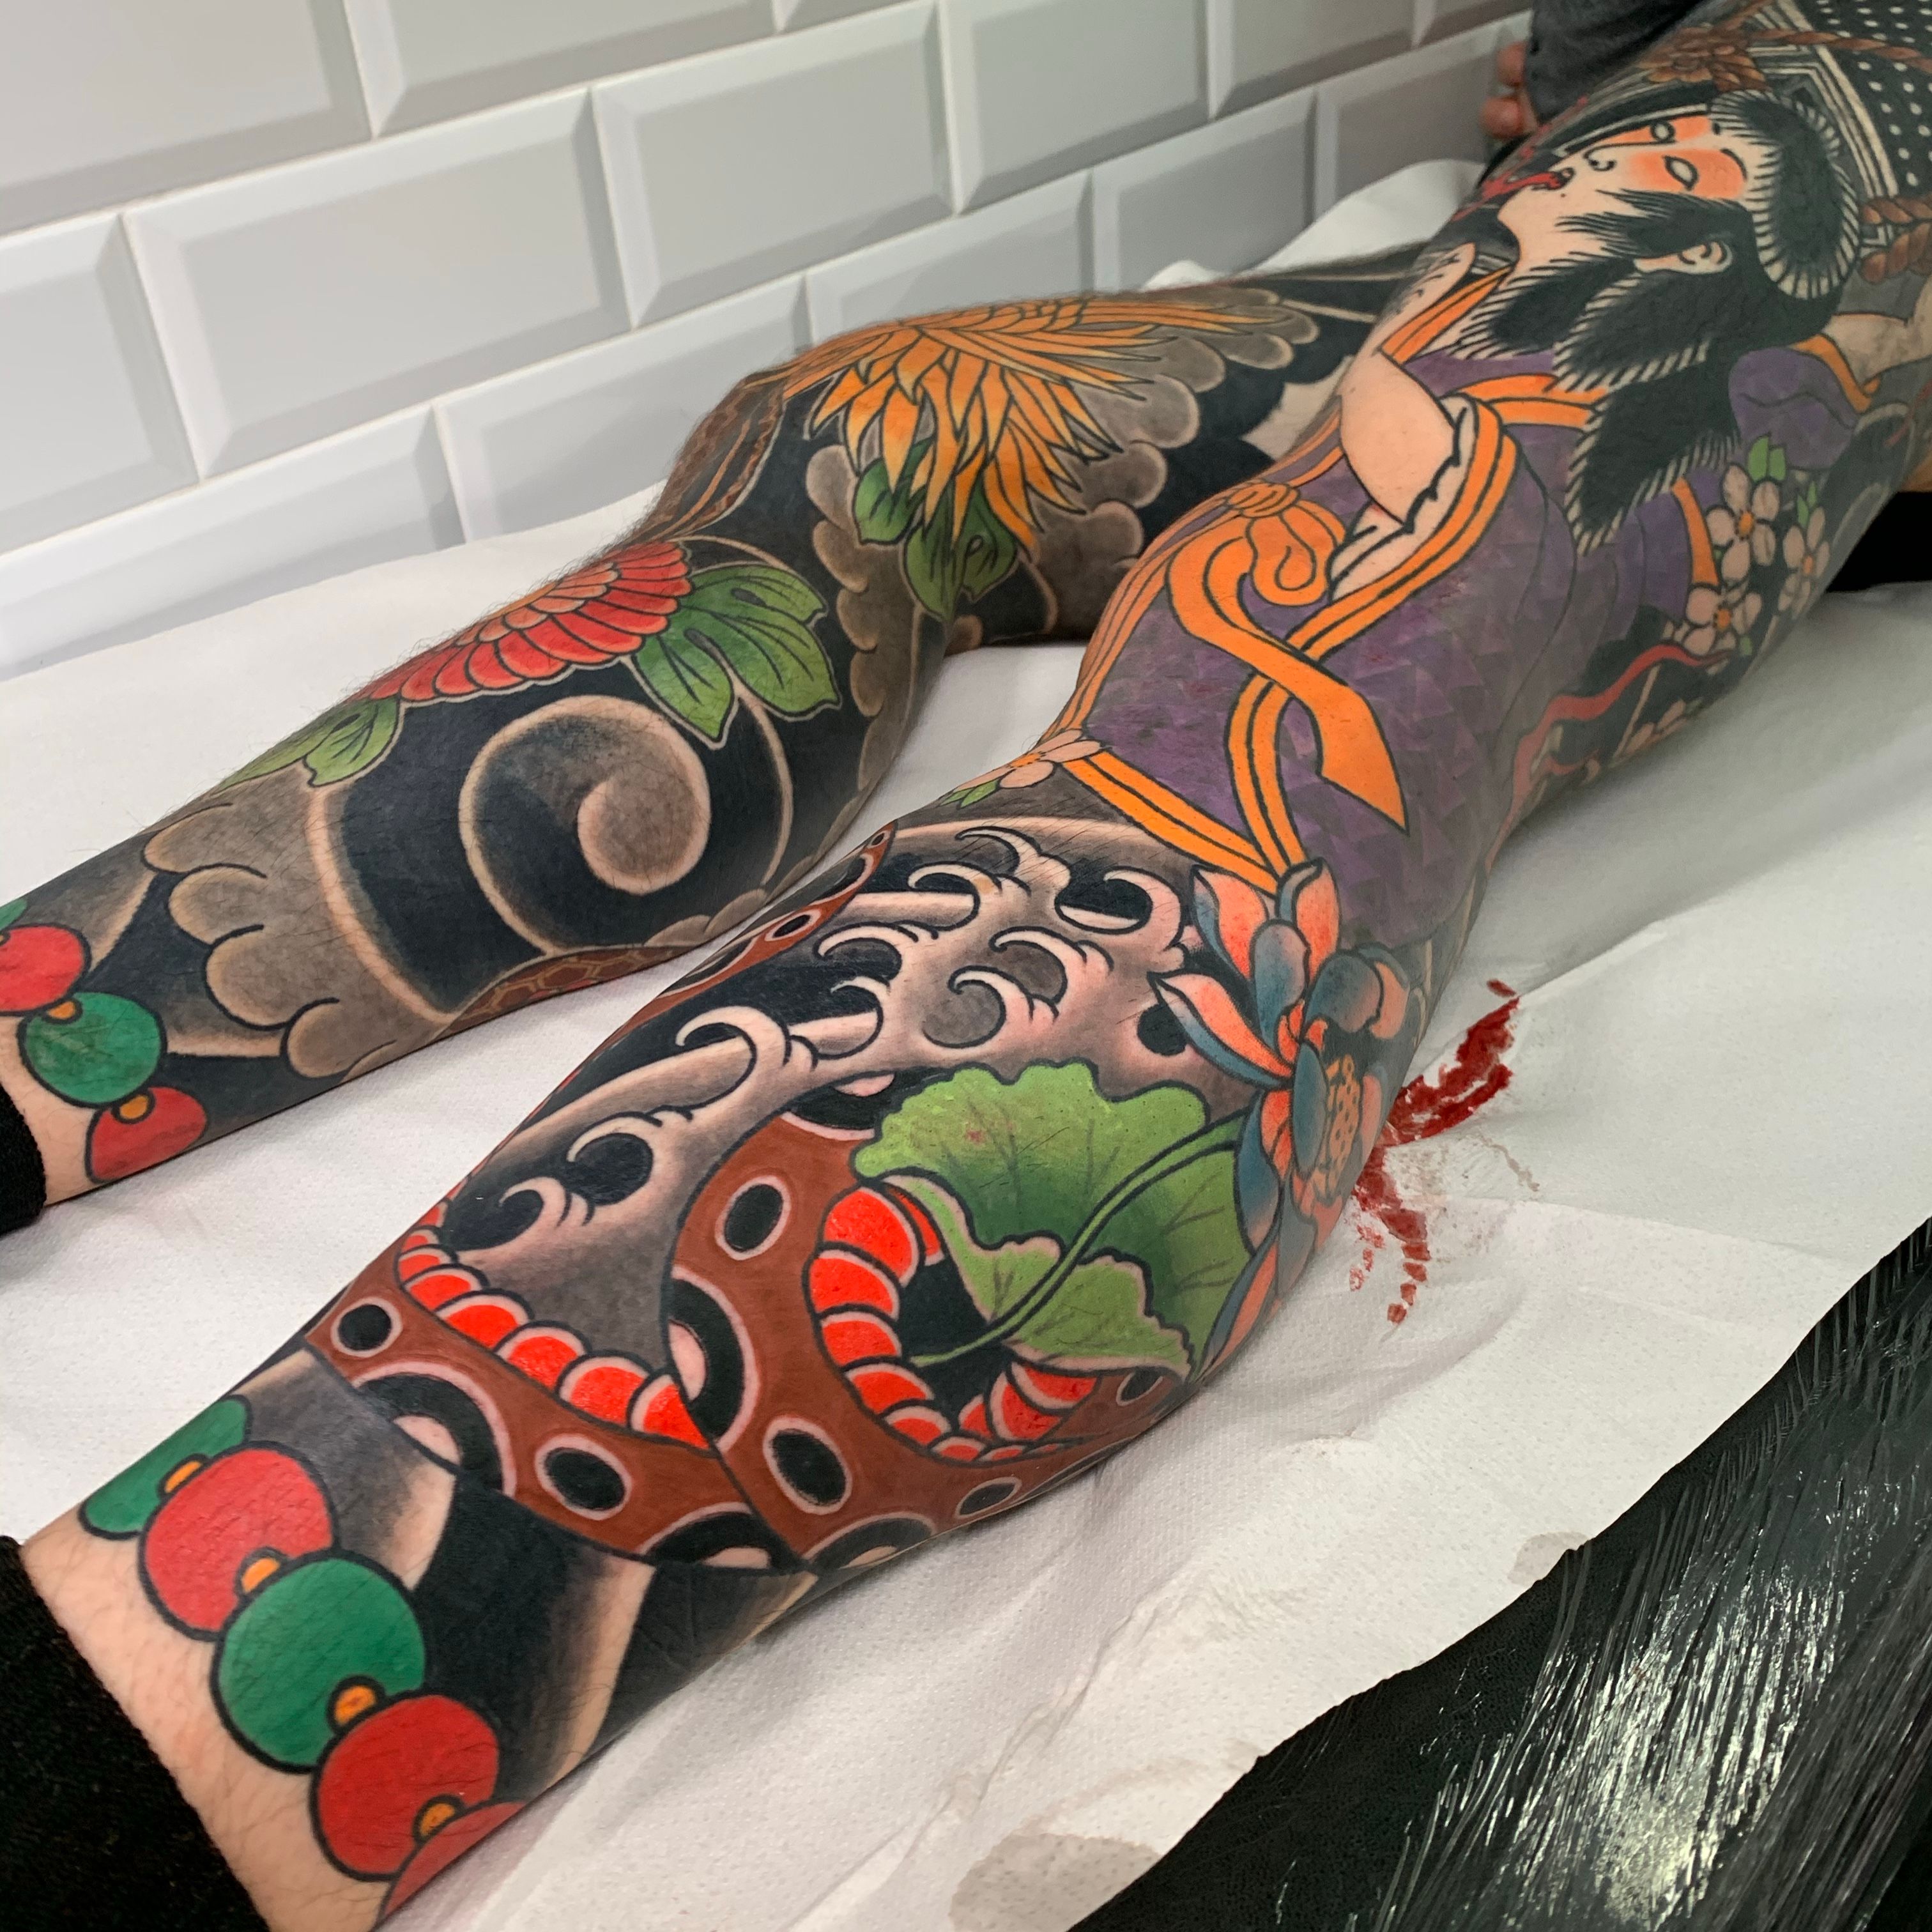 Tattoo uploaded by Anatta Vela • Bodysuit tattoo by Neo.Tribal aka  blackprada #NeoTribal #blackprada #tribal #abstract #blackout #geometric # bodysuit #chest #sleeves #stomach • Tattoodo